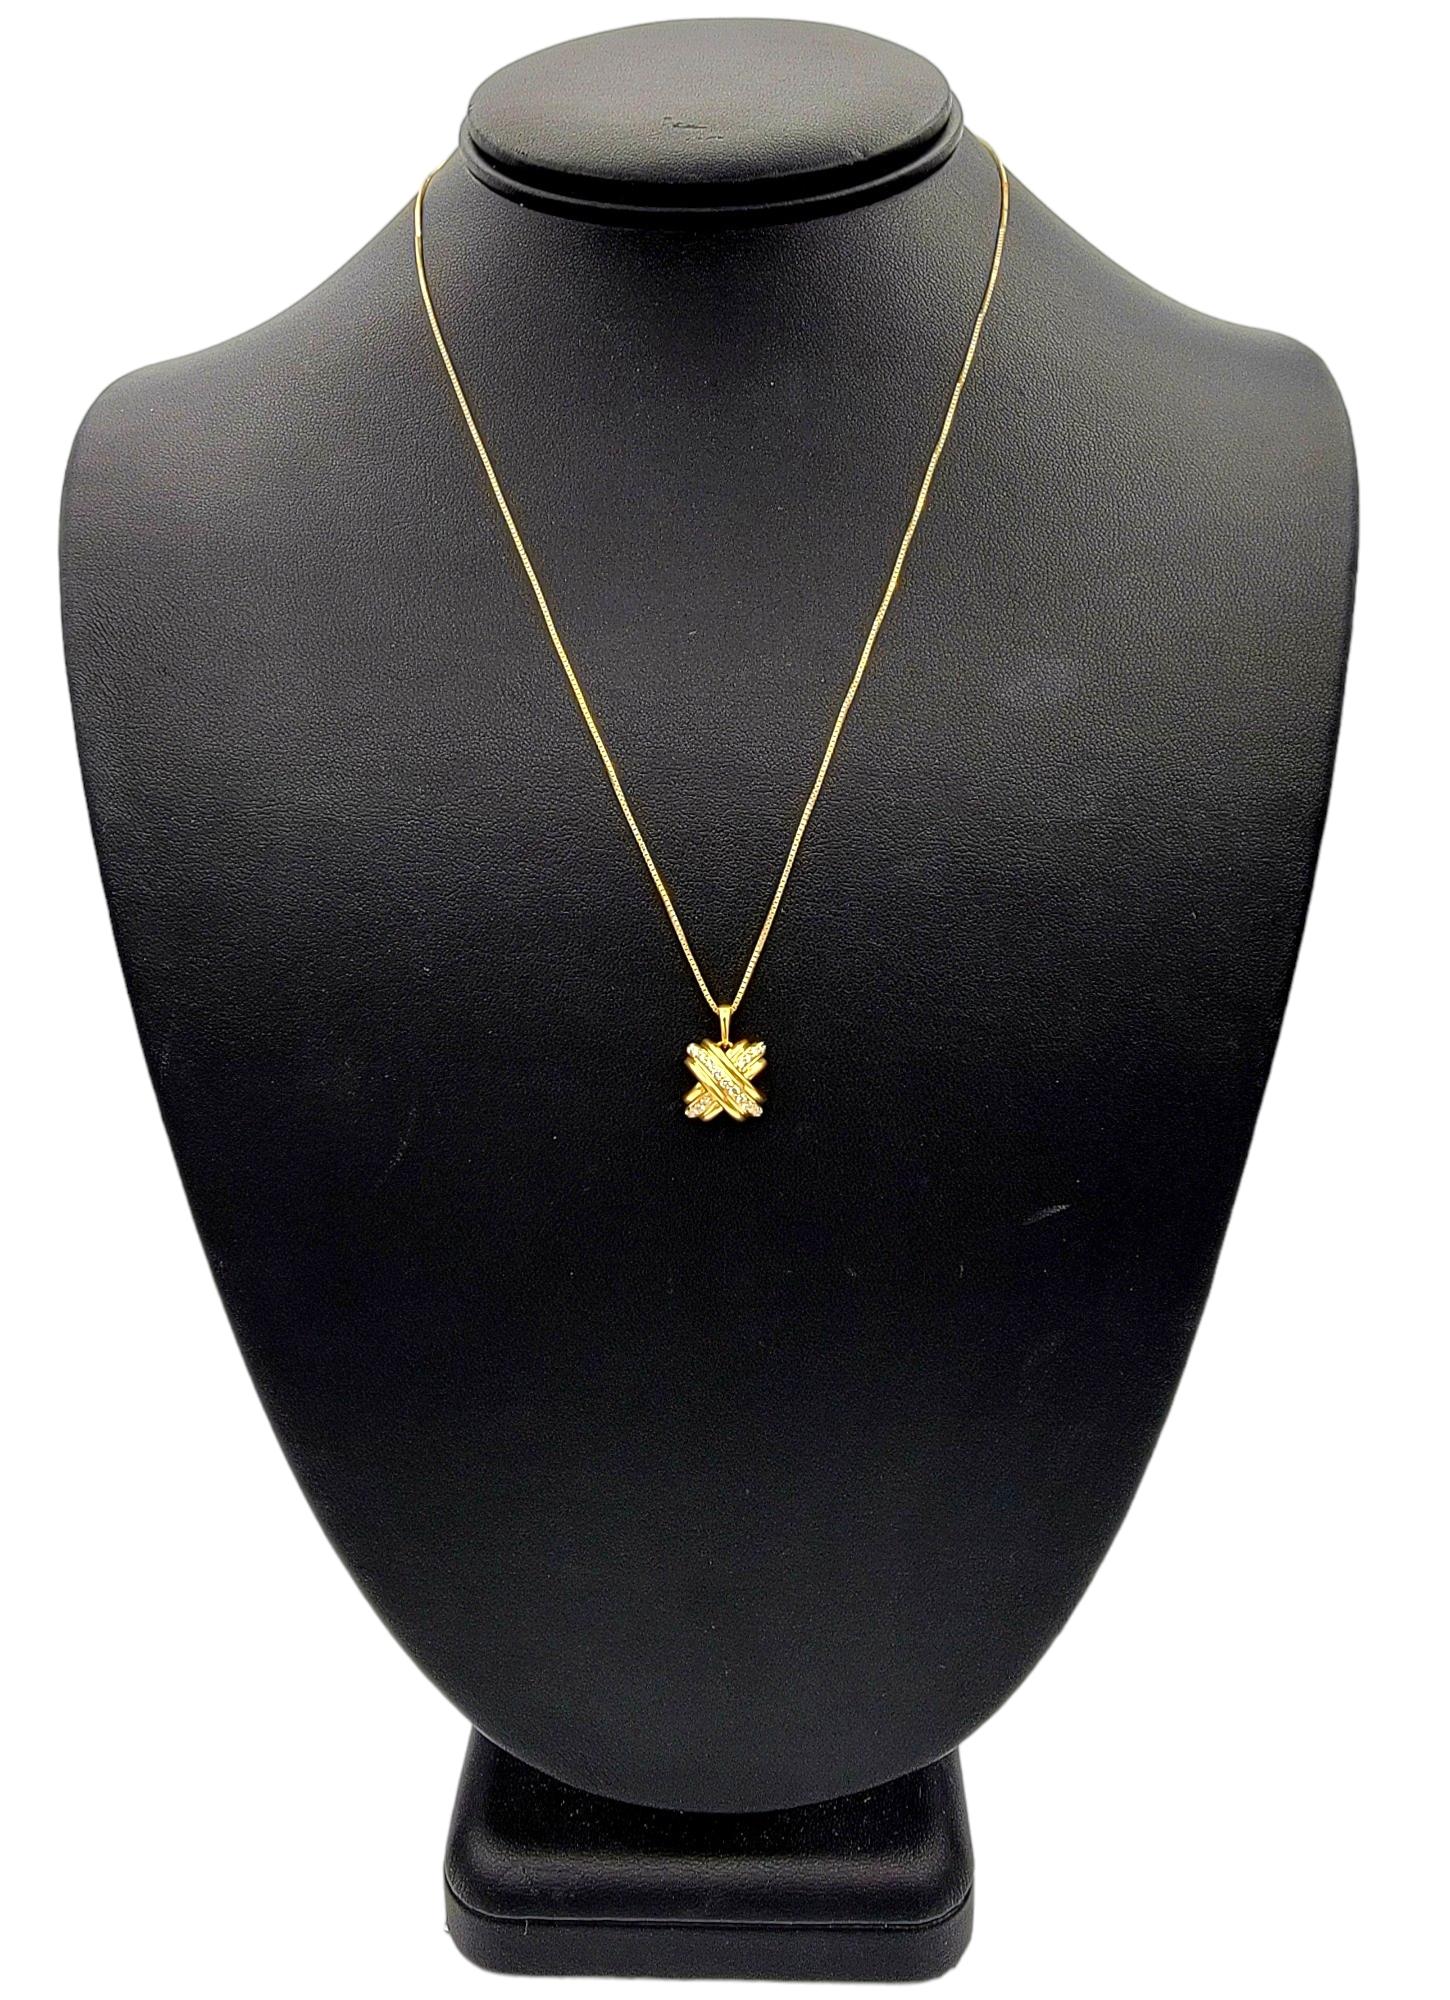 Tiffany & Co. Signature X Design Diamond Pendant Set in 18 Karat Yellow Gold For Sale 3